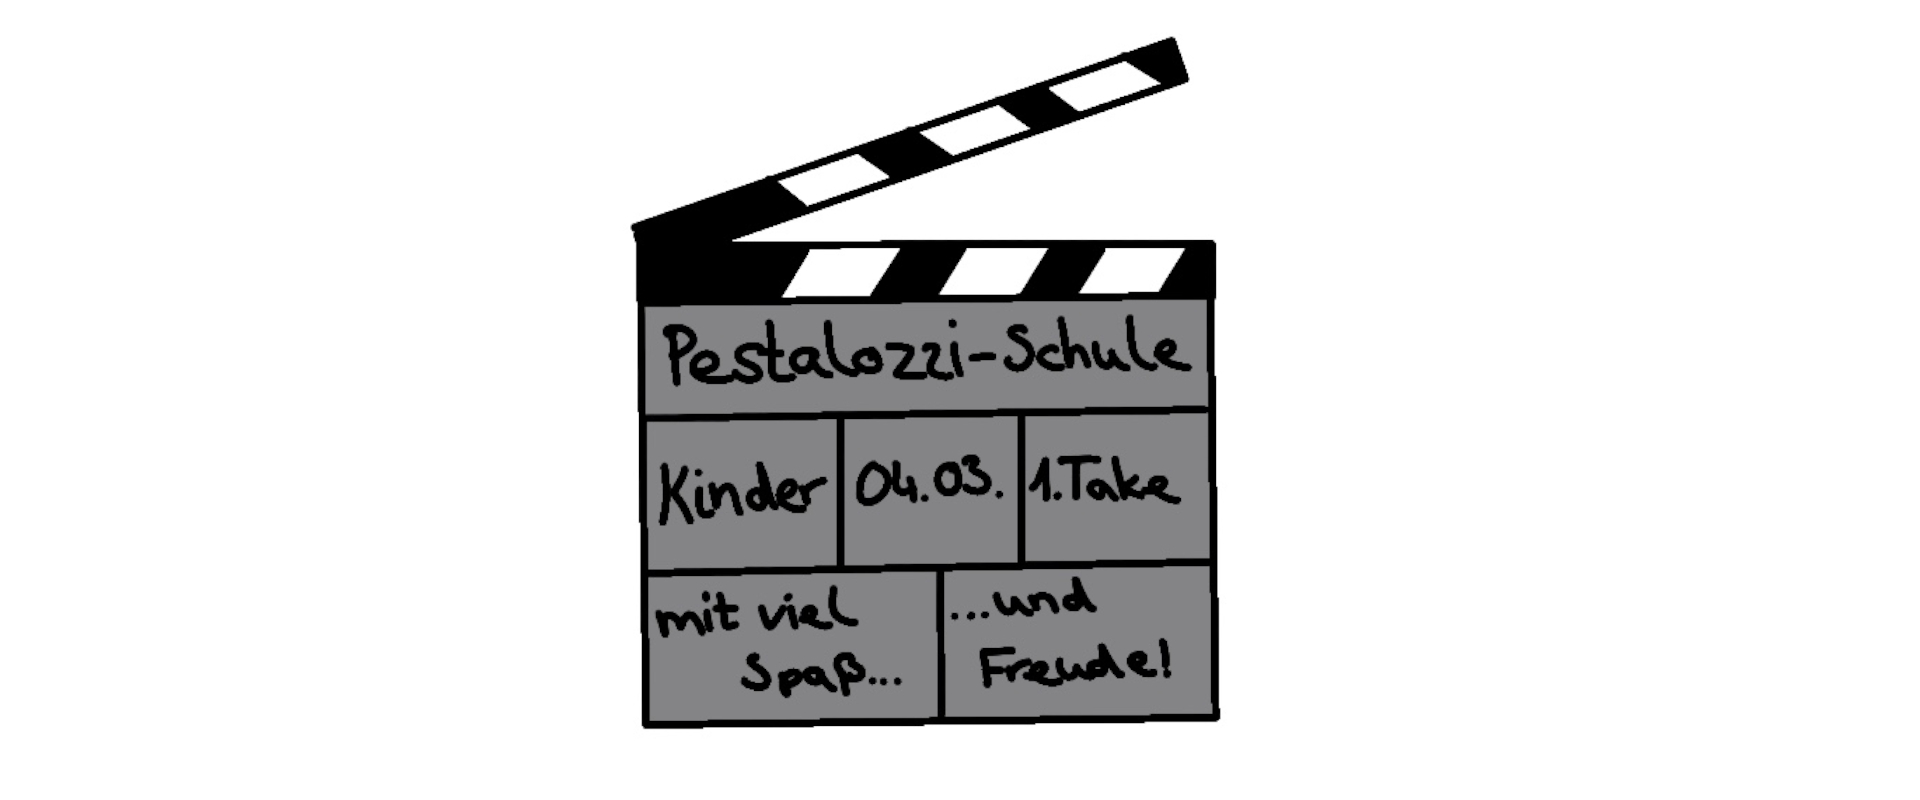 Imagefilm der Pestalozzi-Schule